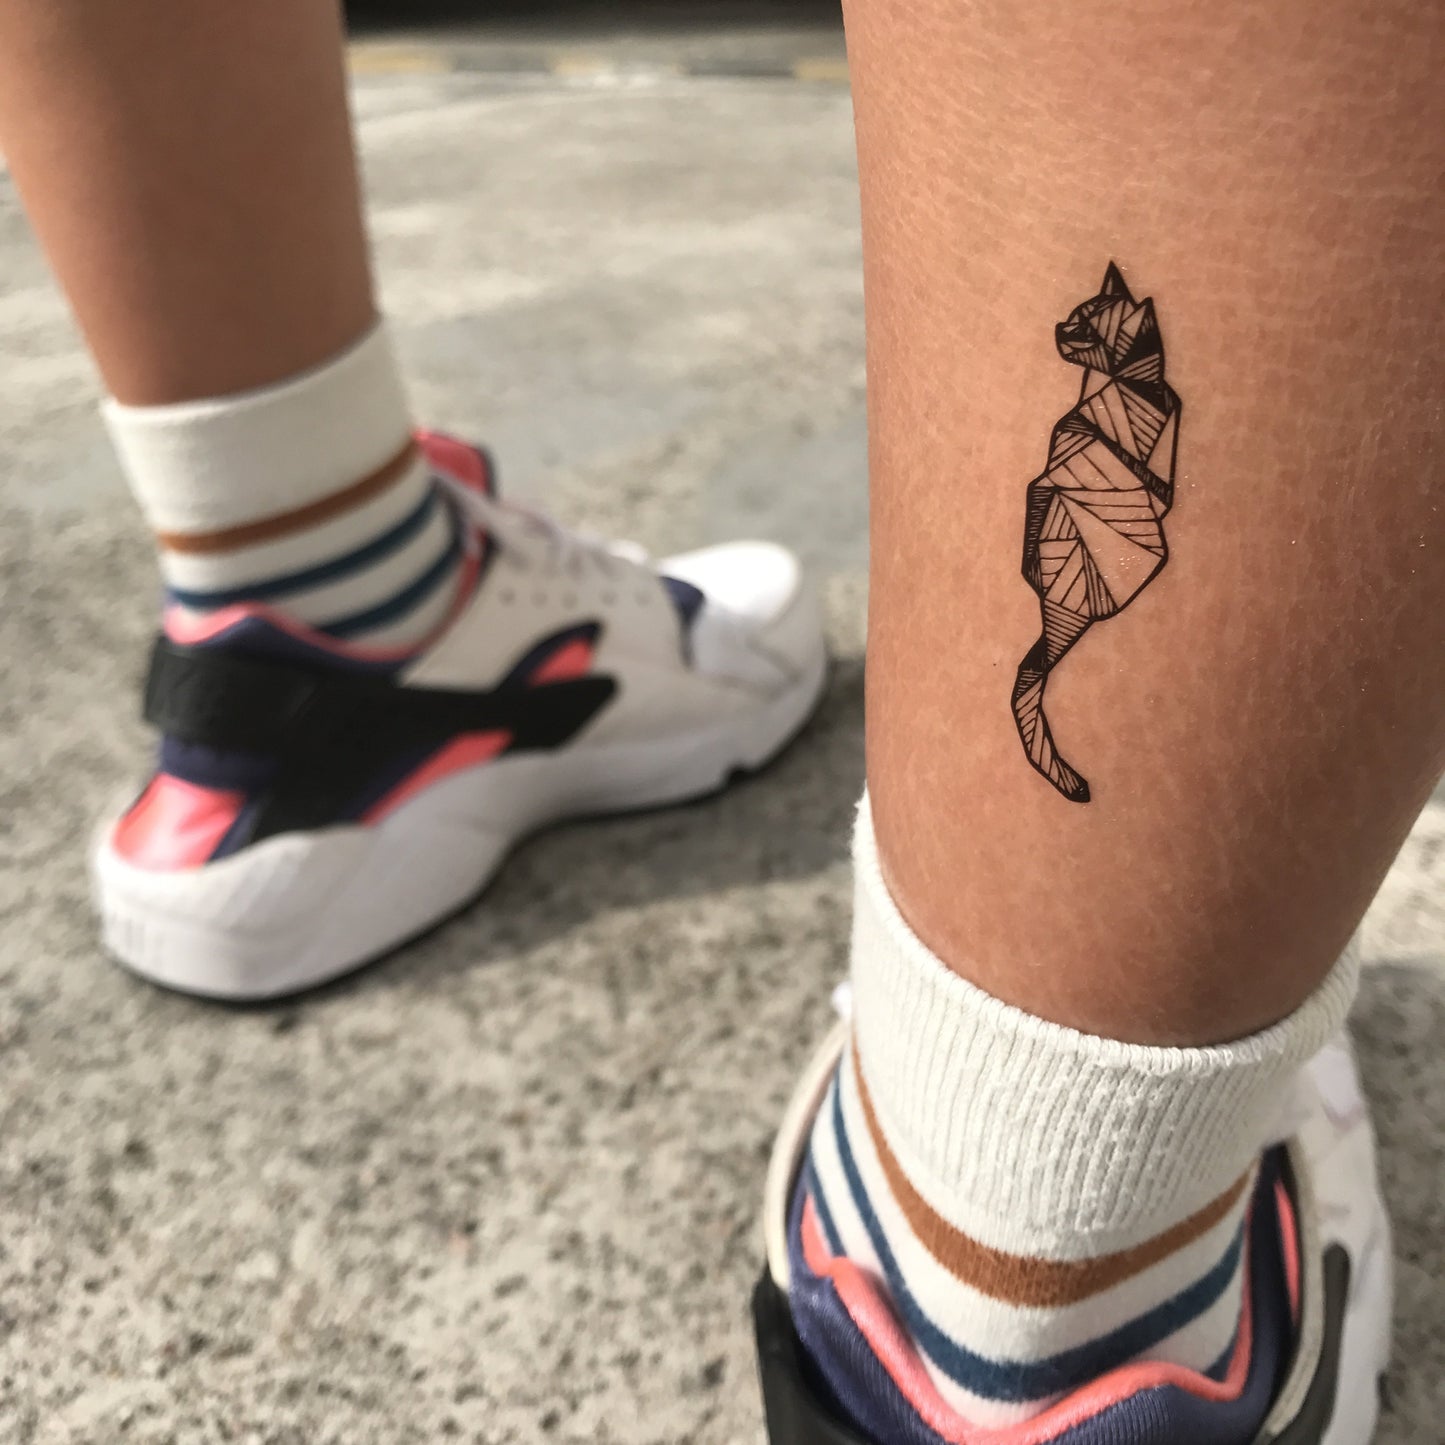 fake small cool geometric cat animal temporary tattoo sticker design idea on ankle dry skin